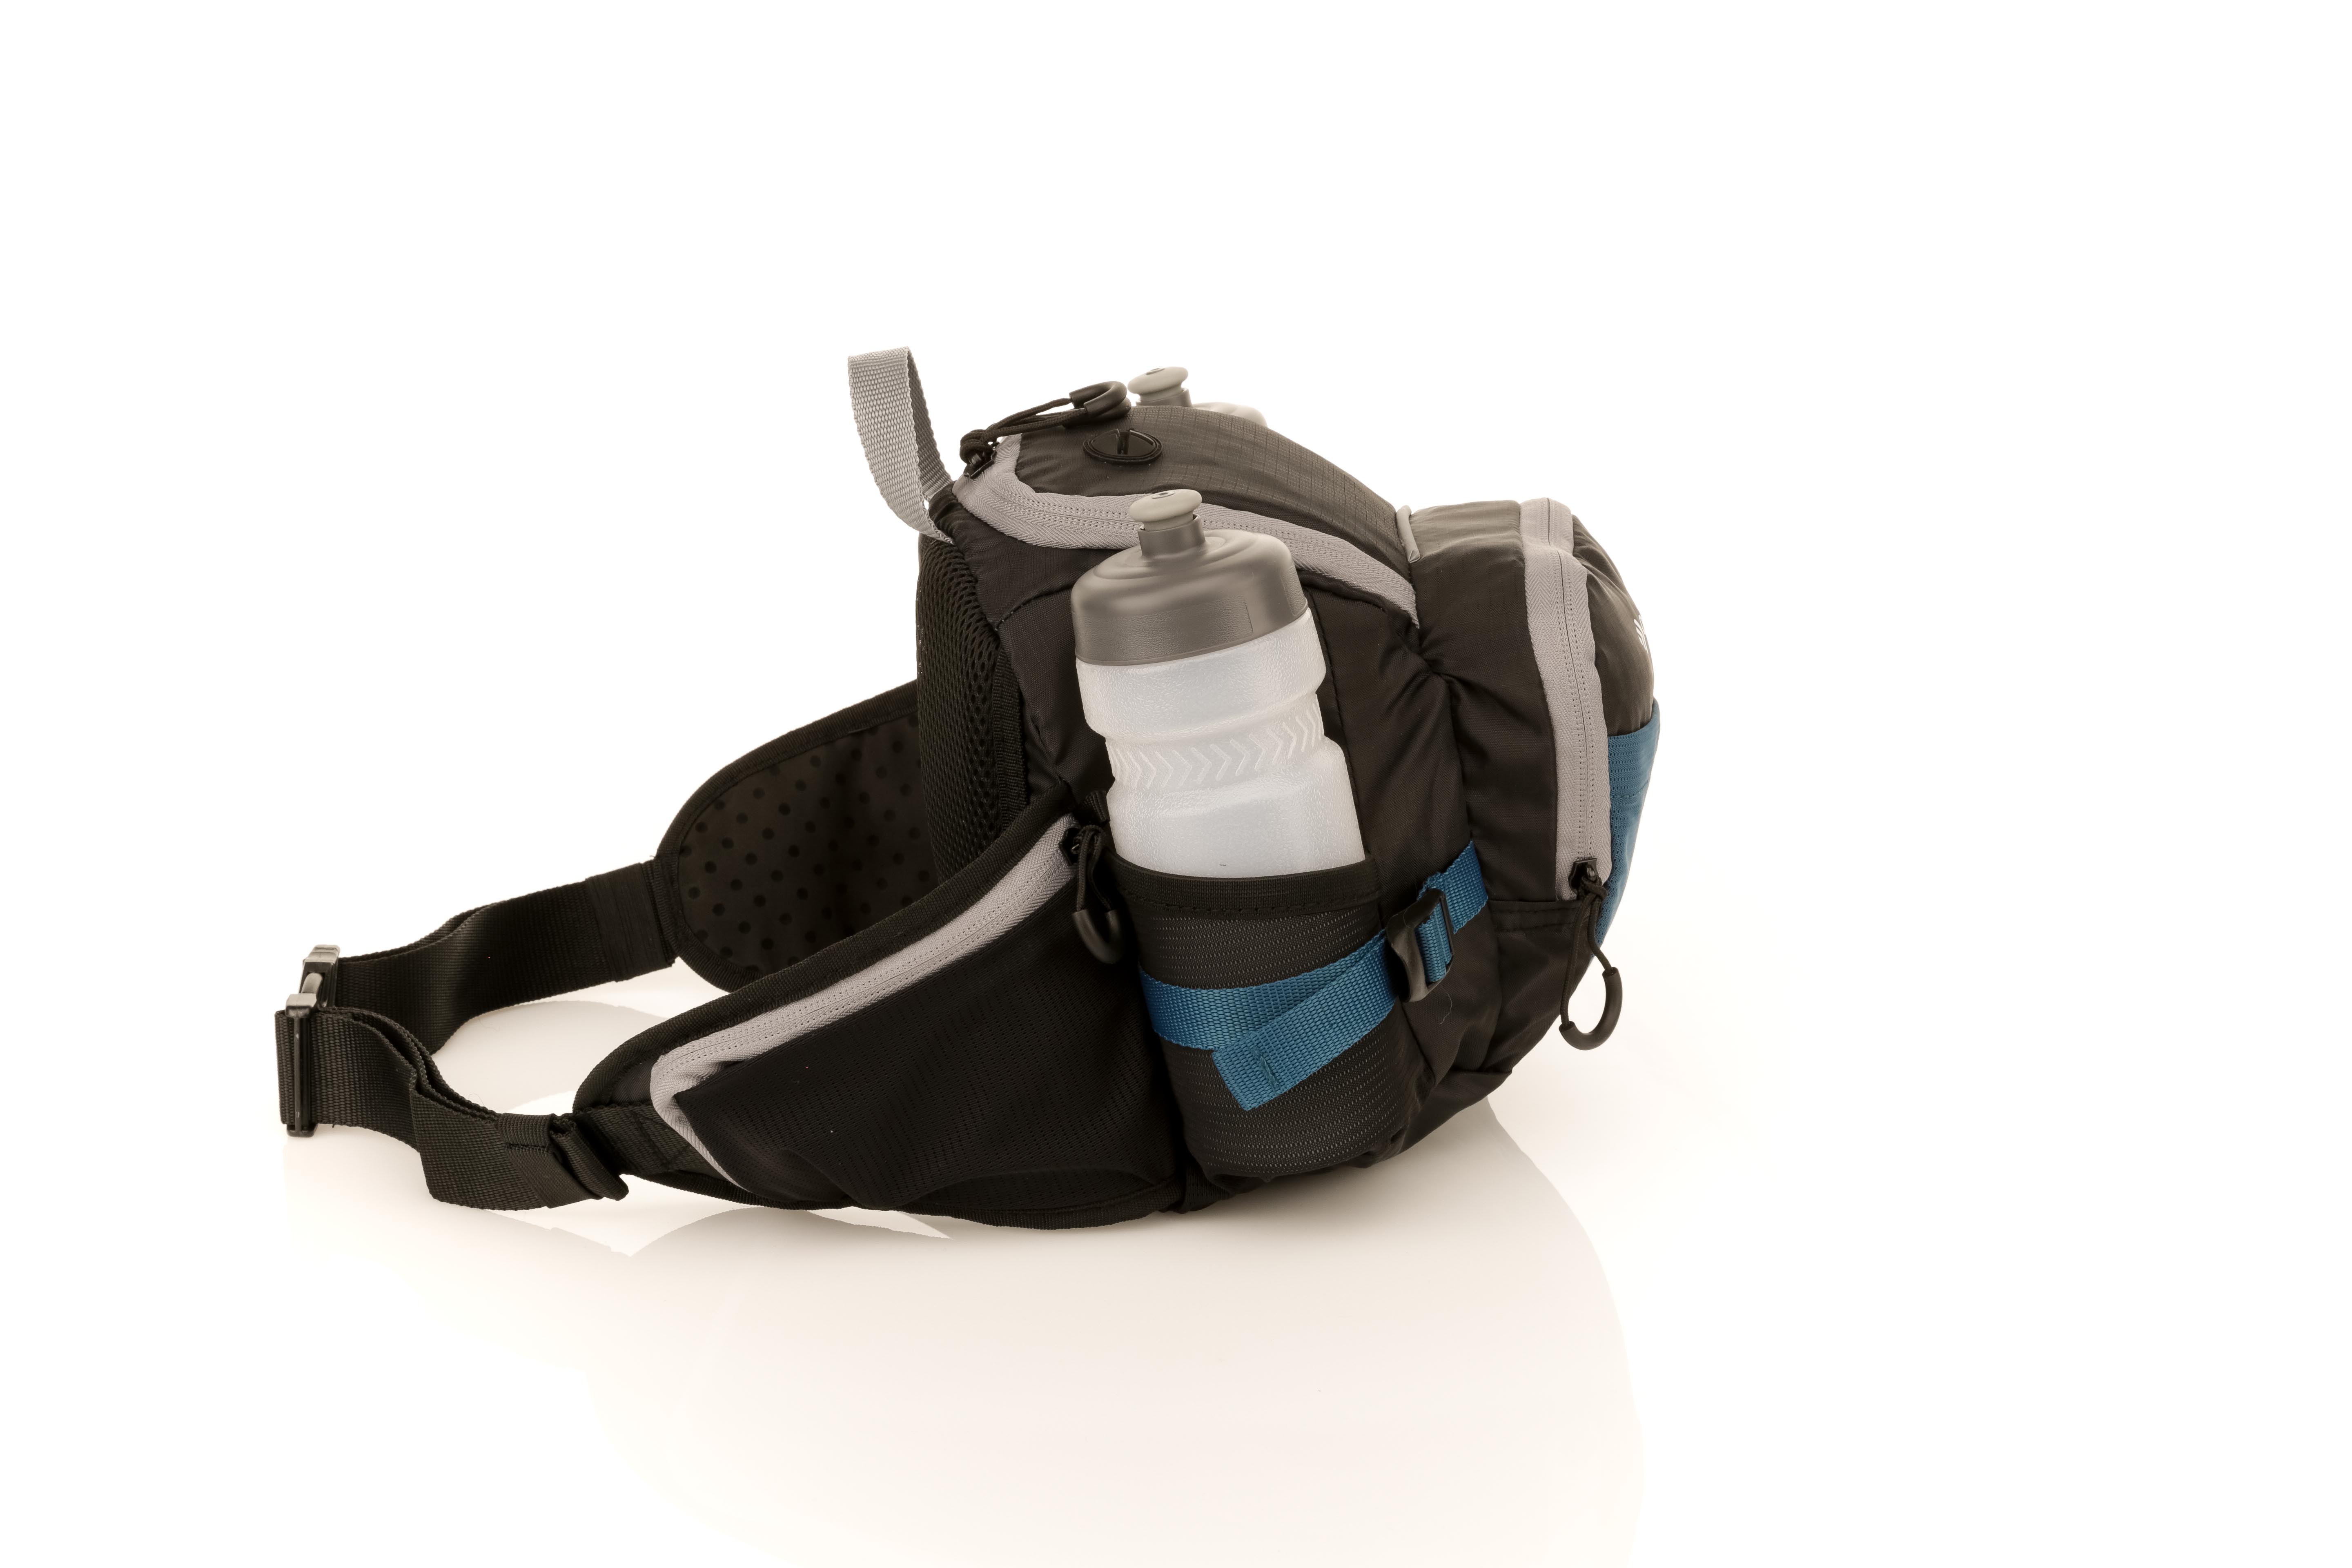 INOOMP 12 Pocket Can Holster Vest Mountaineering Outdoor Beer Belt Drink  Storage Waist Bag for Carrying Travel Supplies (Black)